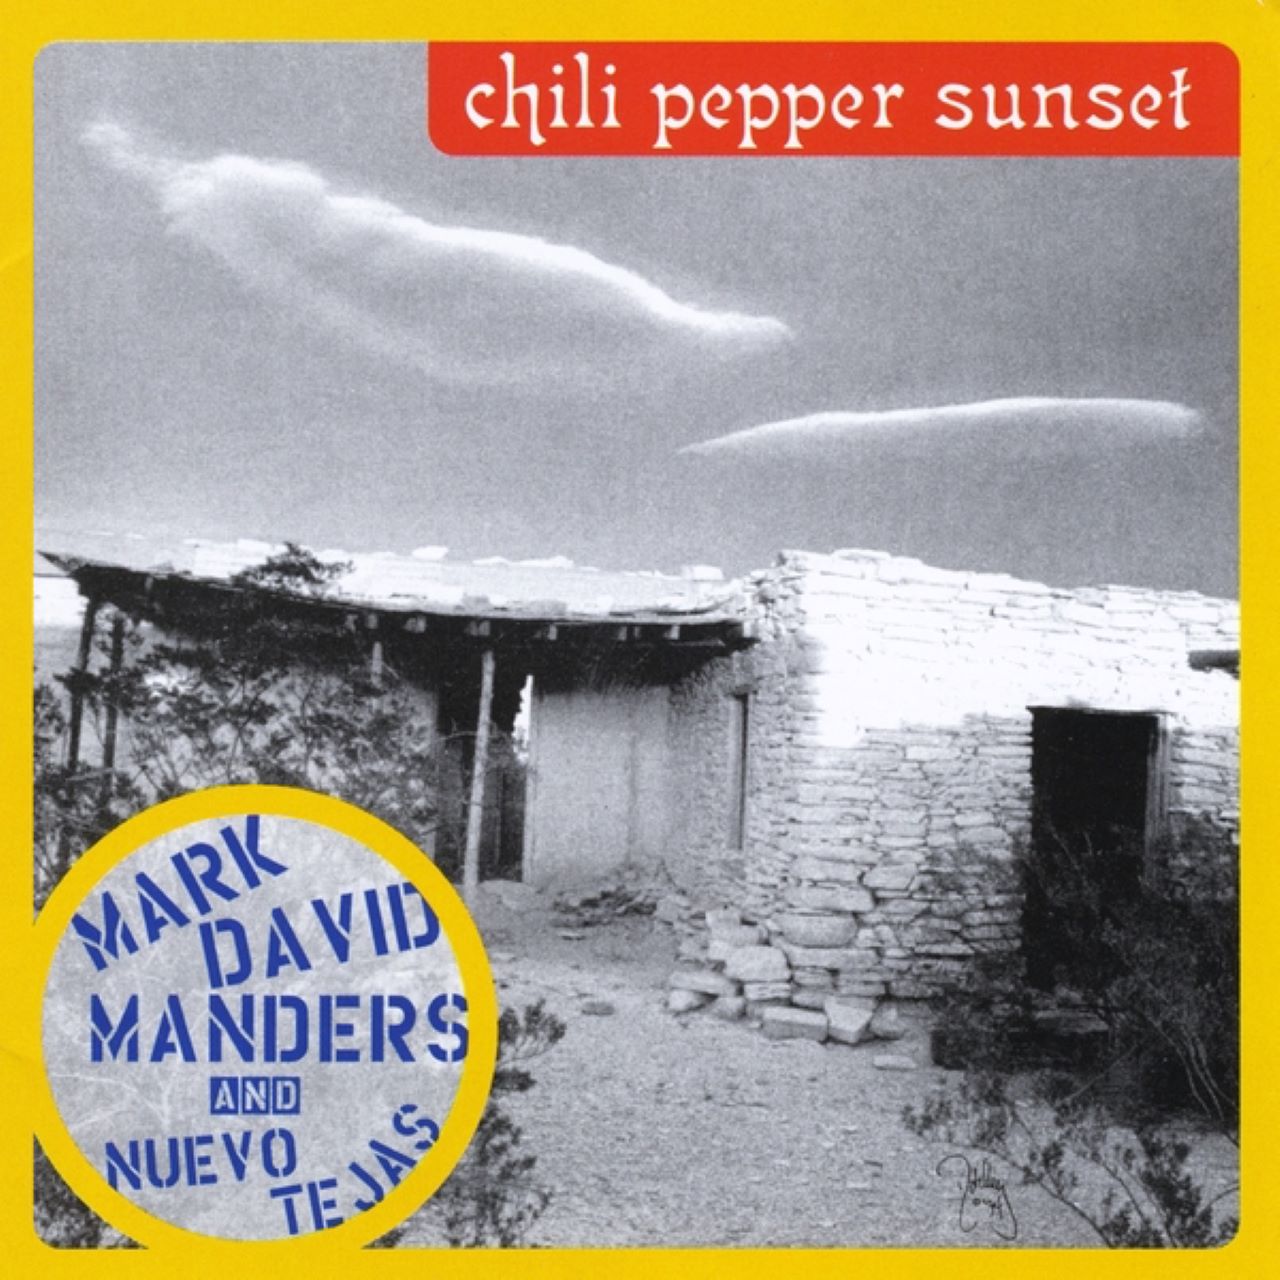 Mark David Manders & Nuevo Tejas - Chili Pepper Sunset cover album